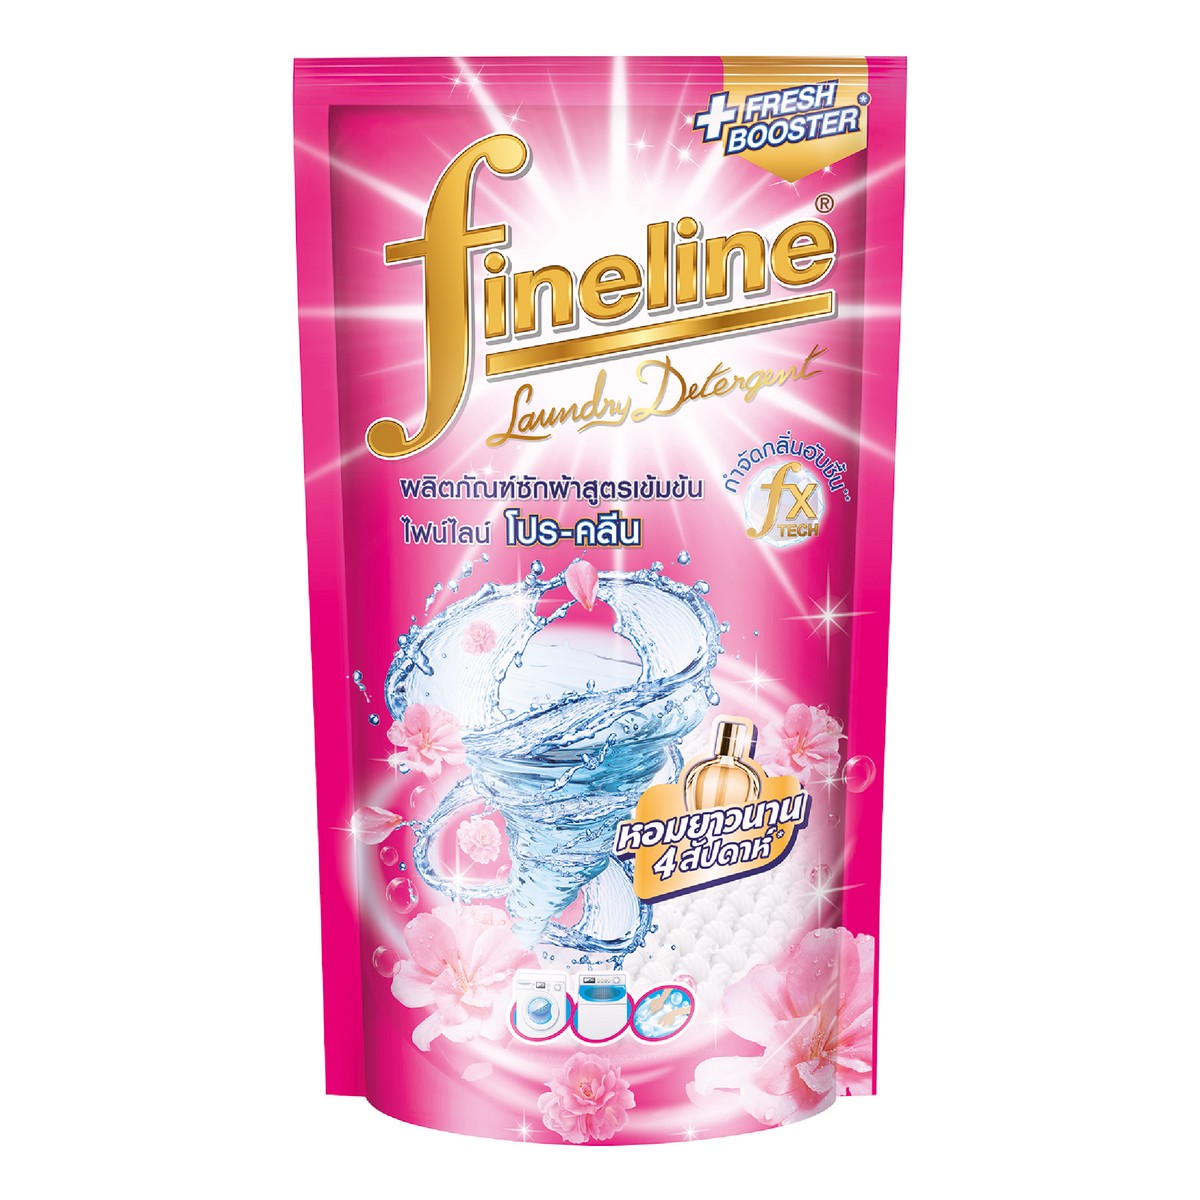 Fineline PRO-CLEAN Concentrate Laundry Detergent, NEO (Гель-концентрат для стирки ПРО-КЛИН), 700 мл.